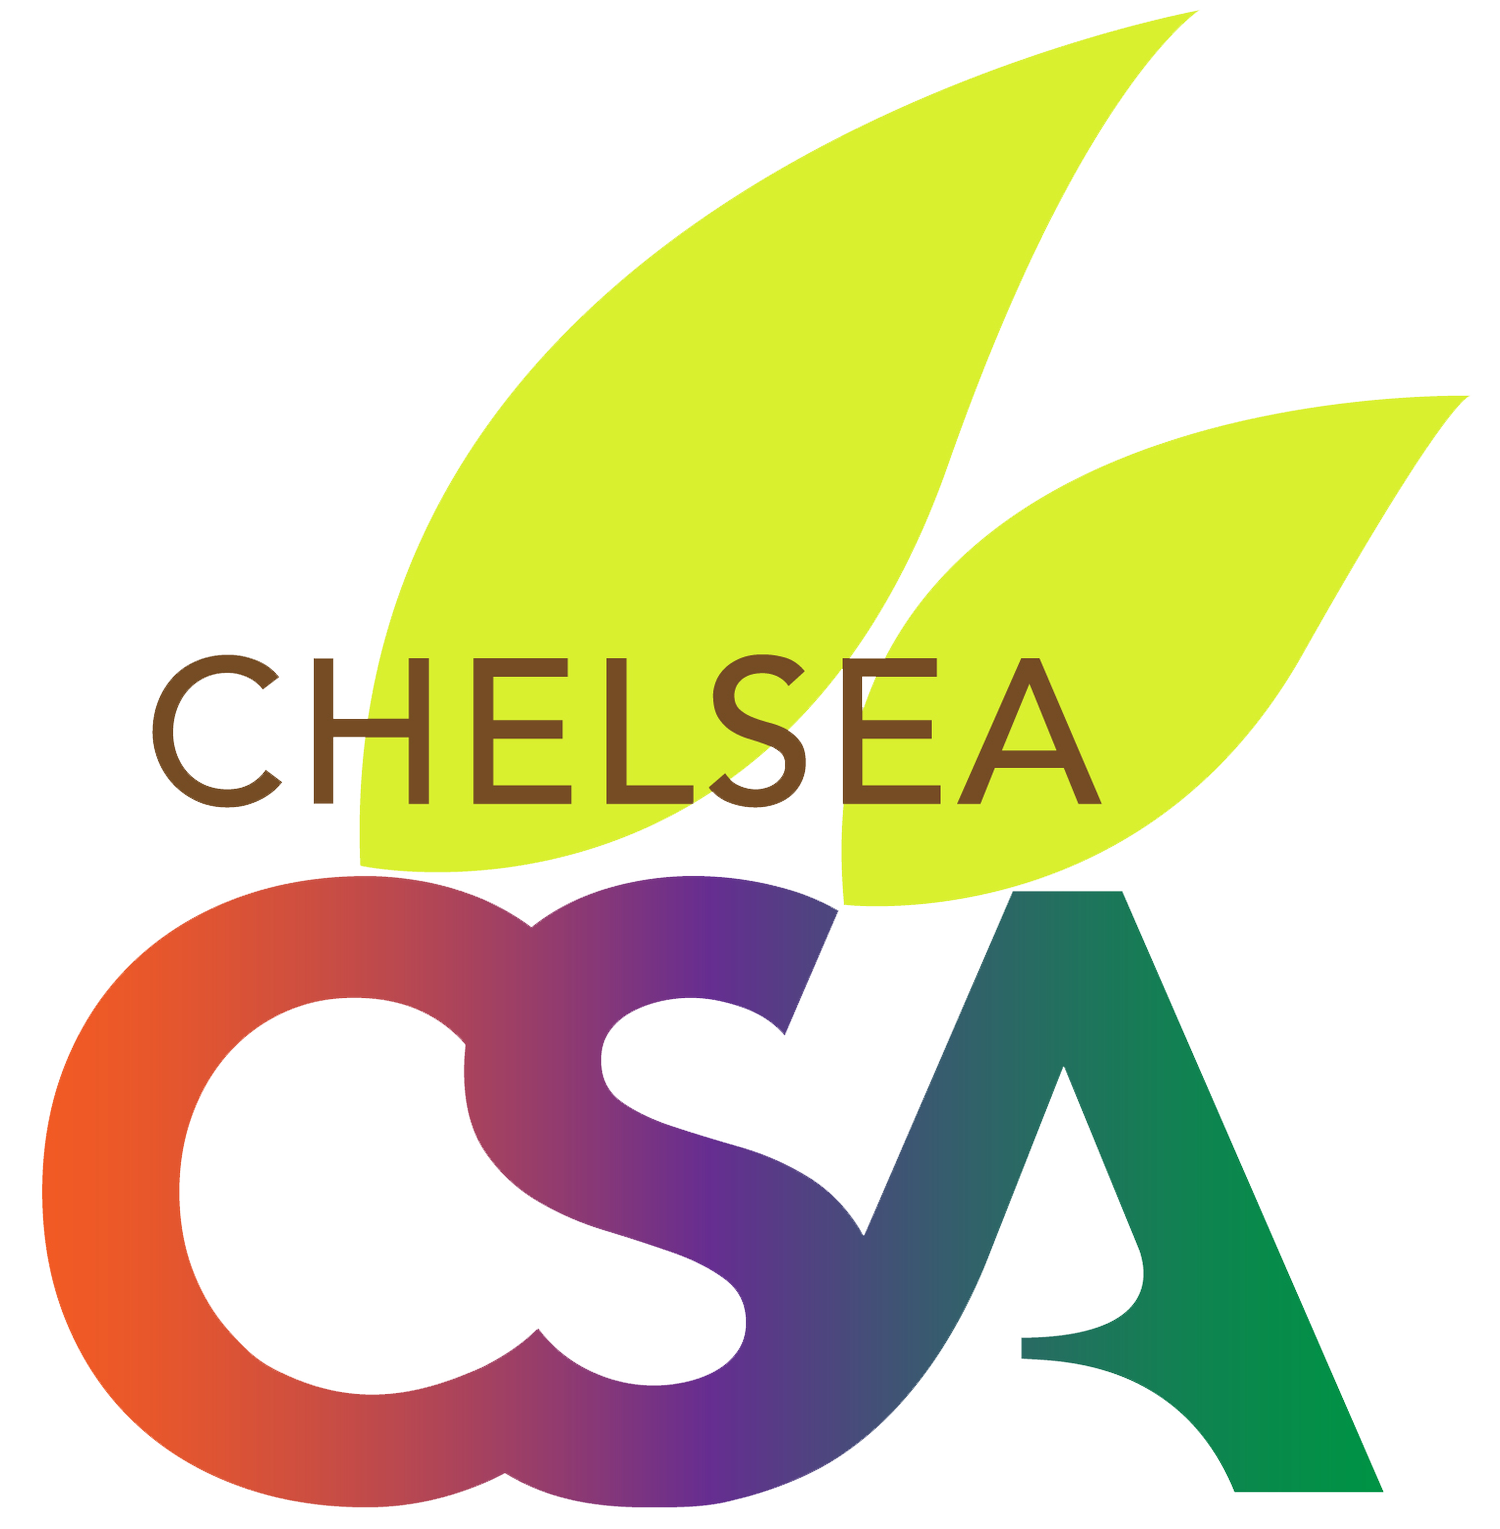 Chelsea CSA